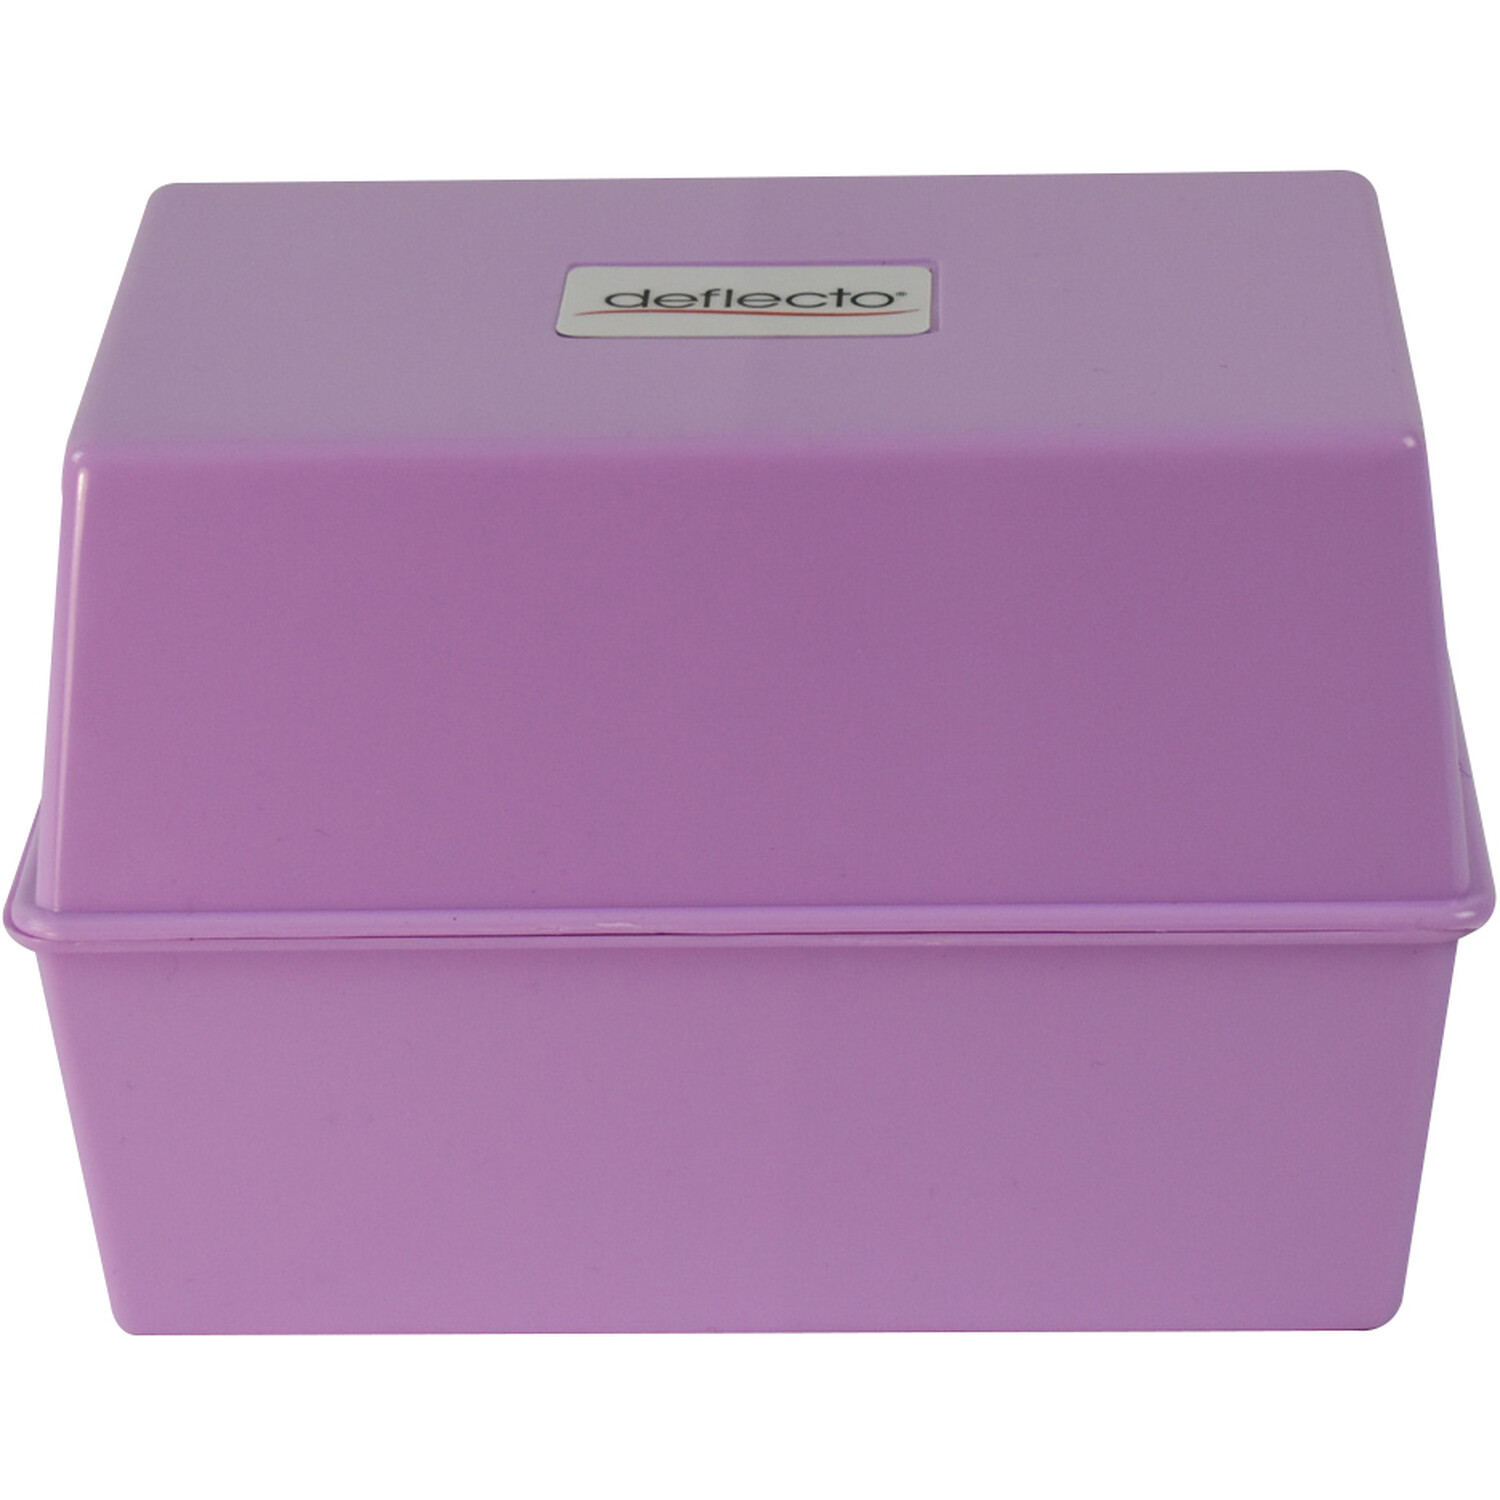 Deflecto Card Index Box - Lavender Image 1